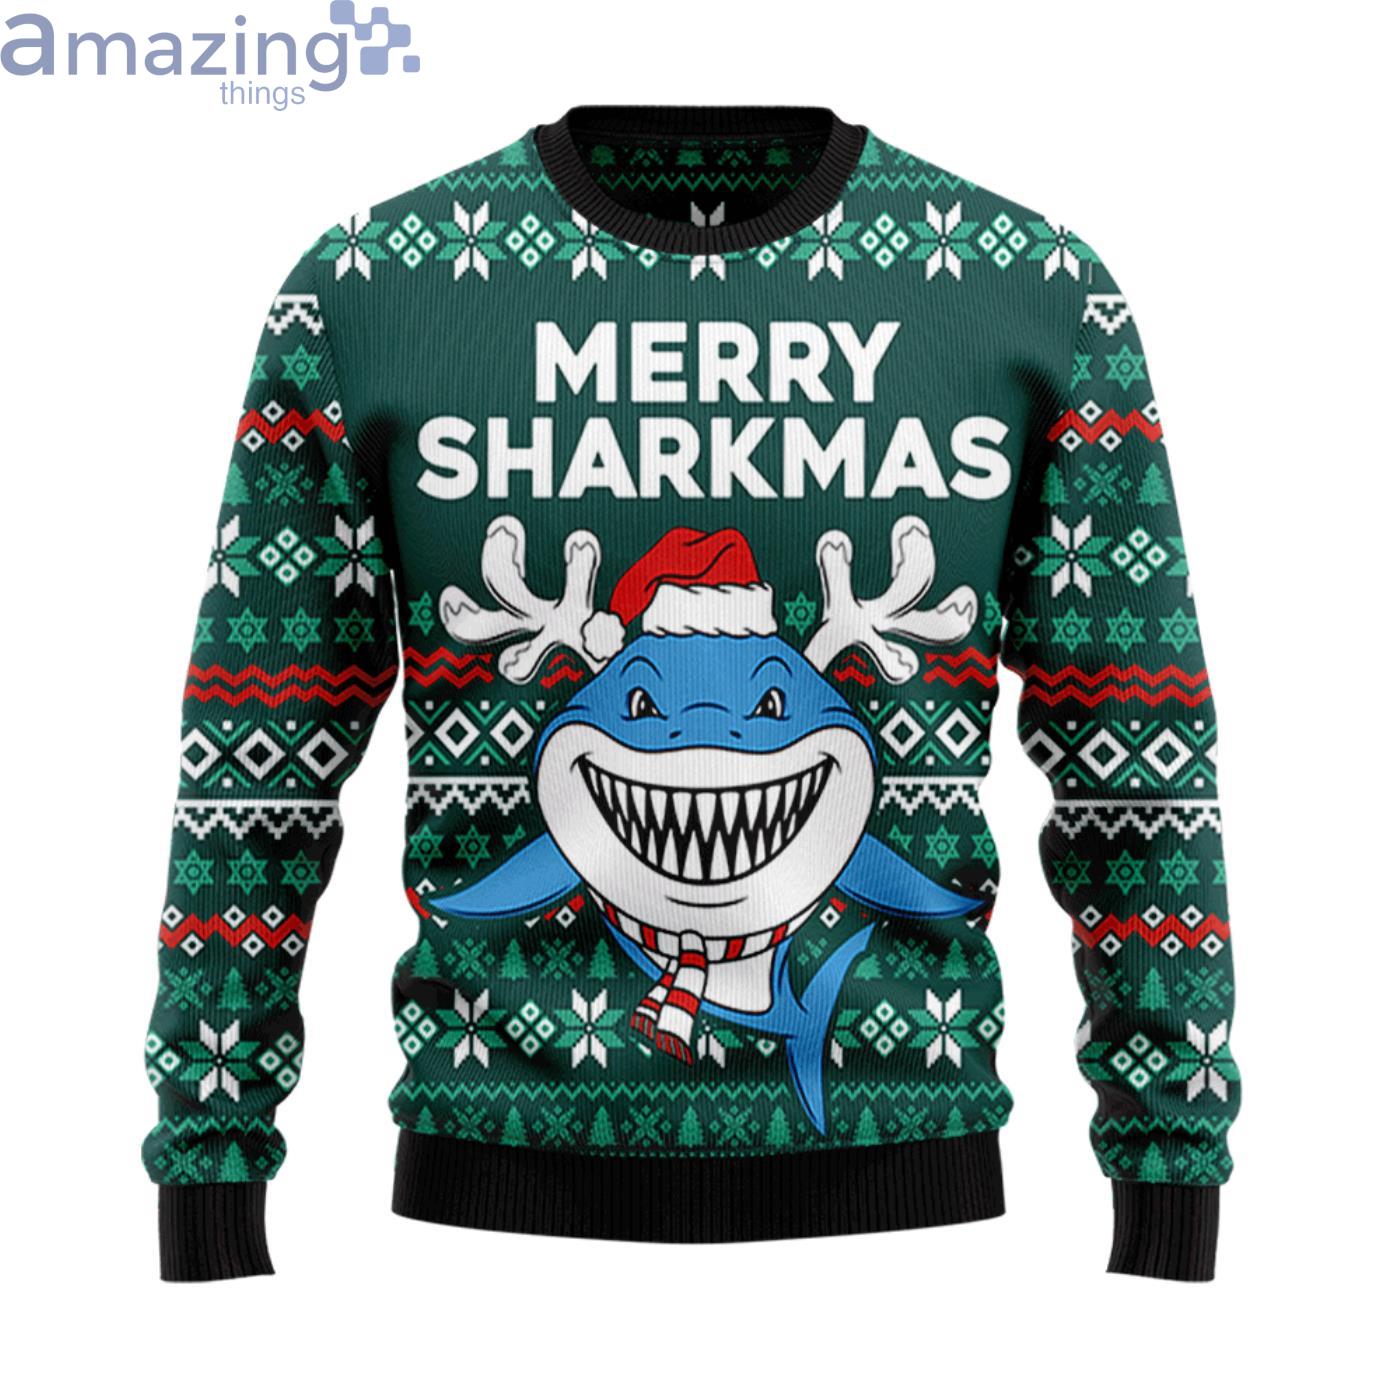 Merry Sharkmas Christmas Ugly Sweater Product Photo 1